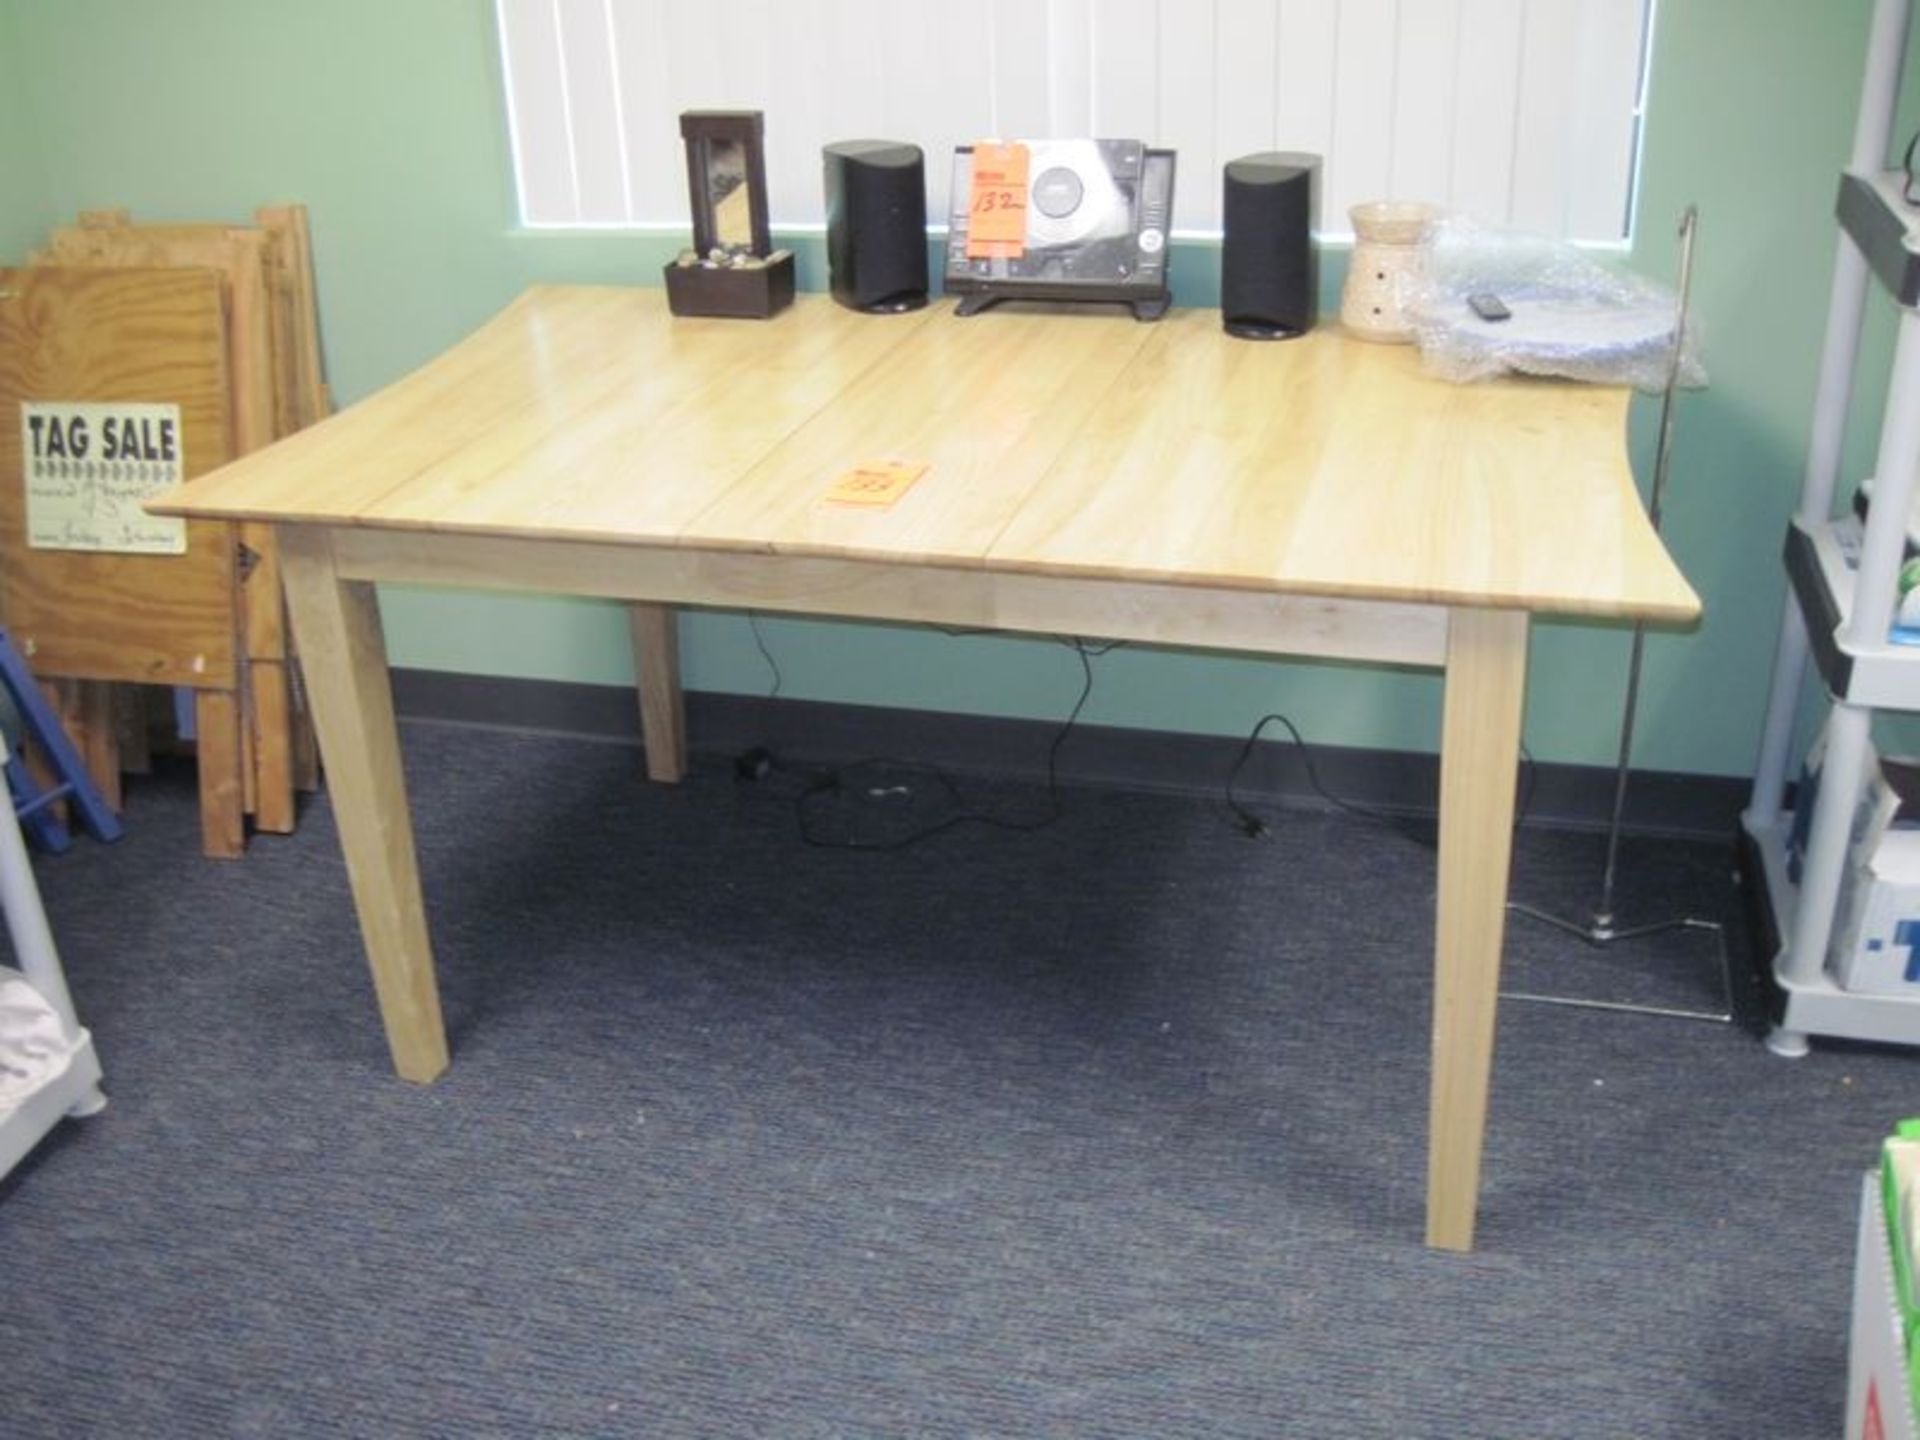 5' X 3' oak table